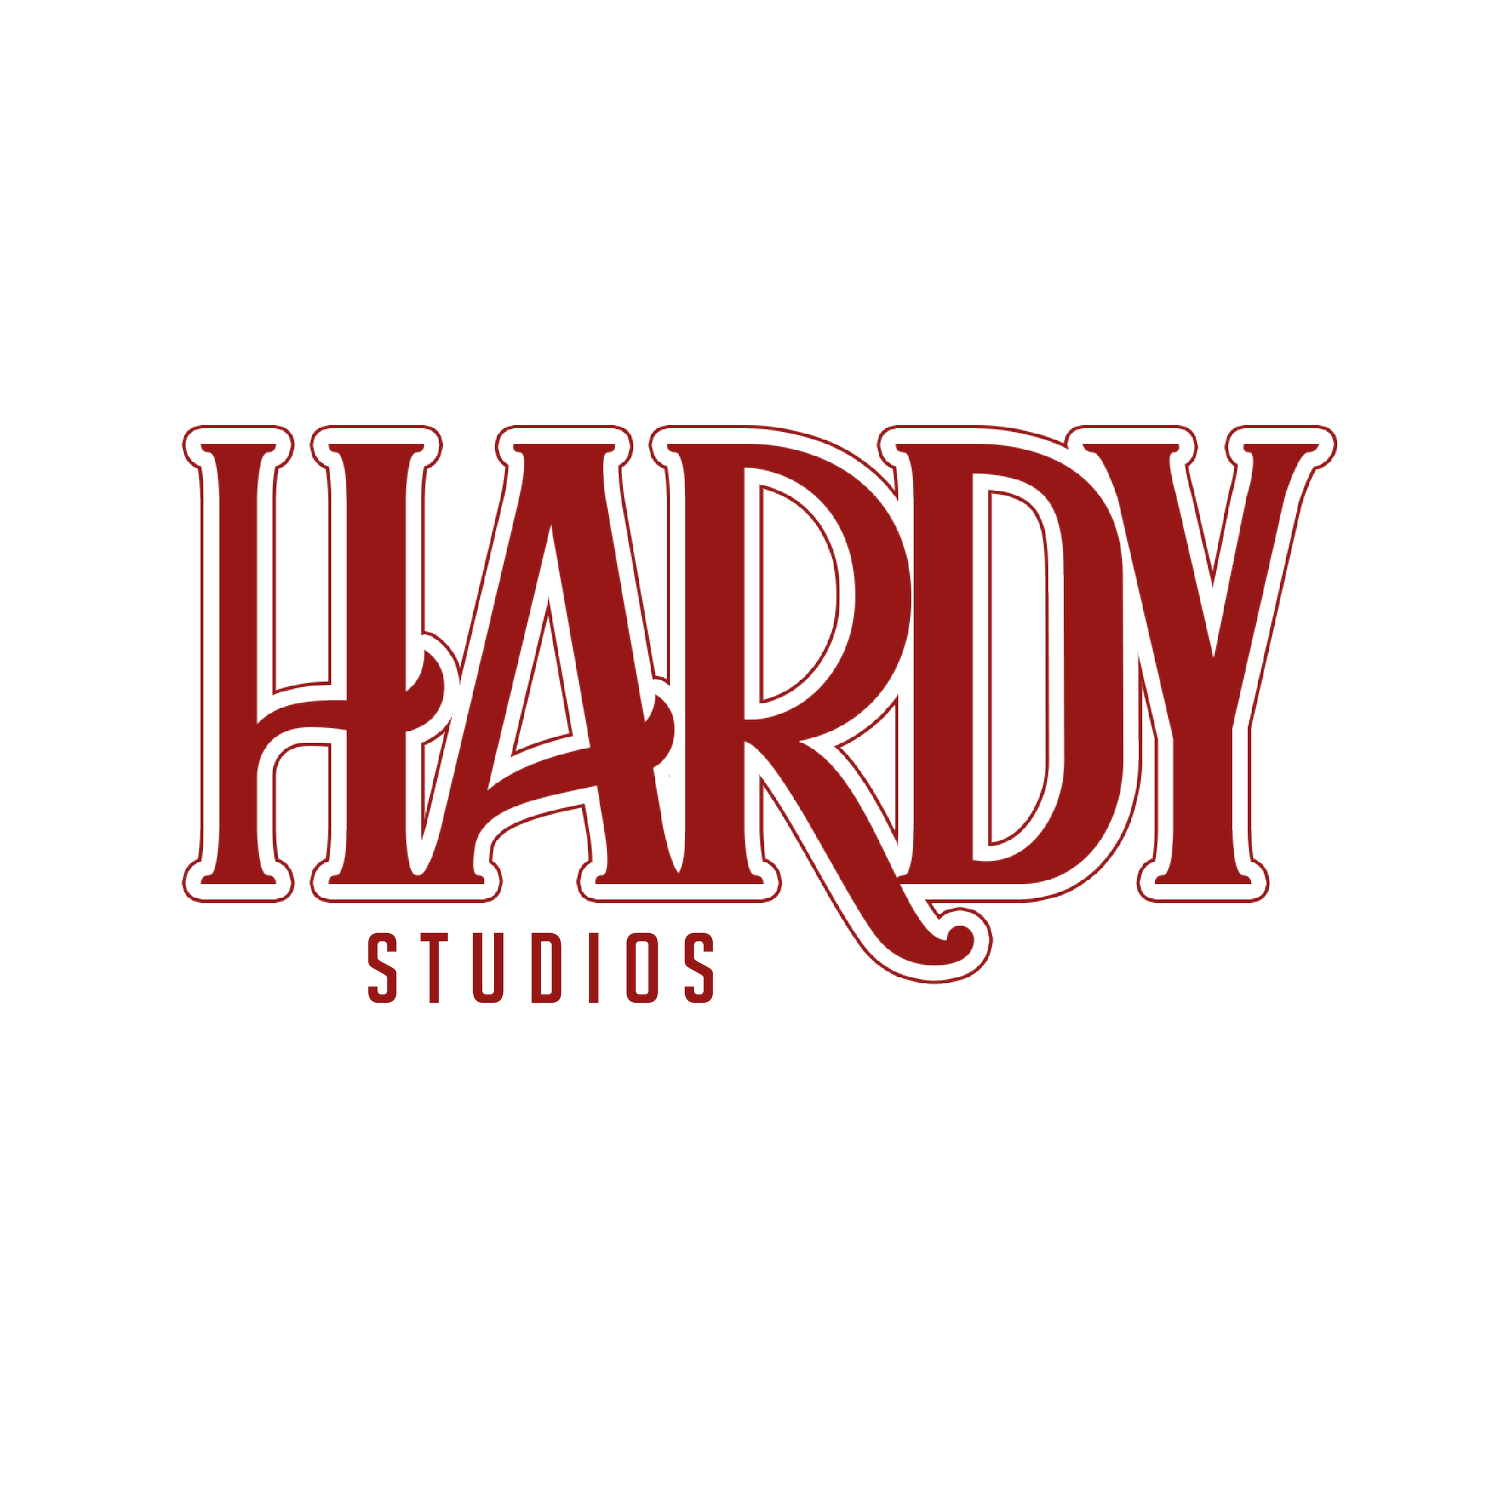 HARDY STUDIOS